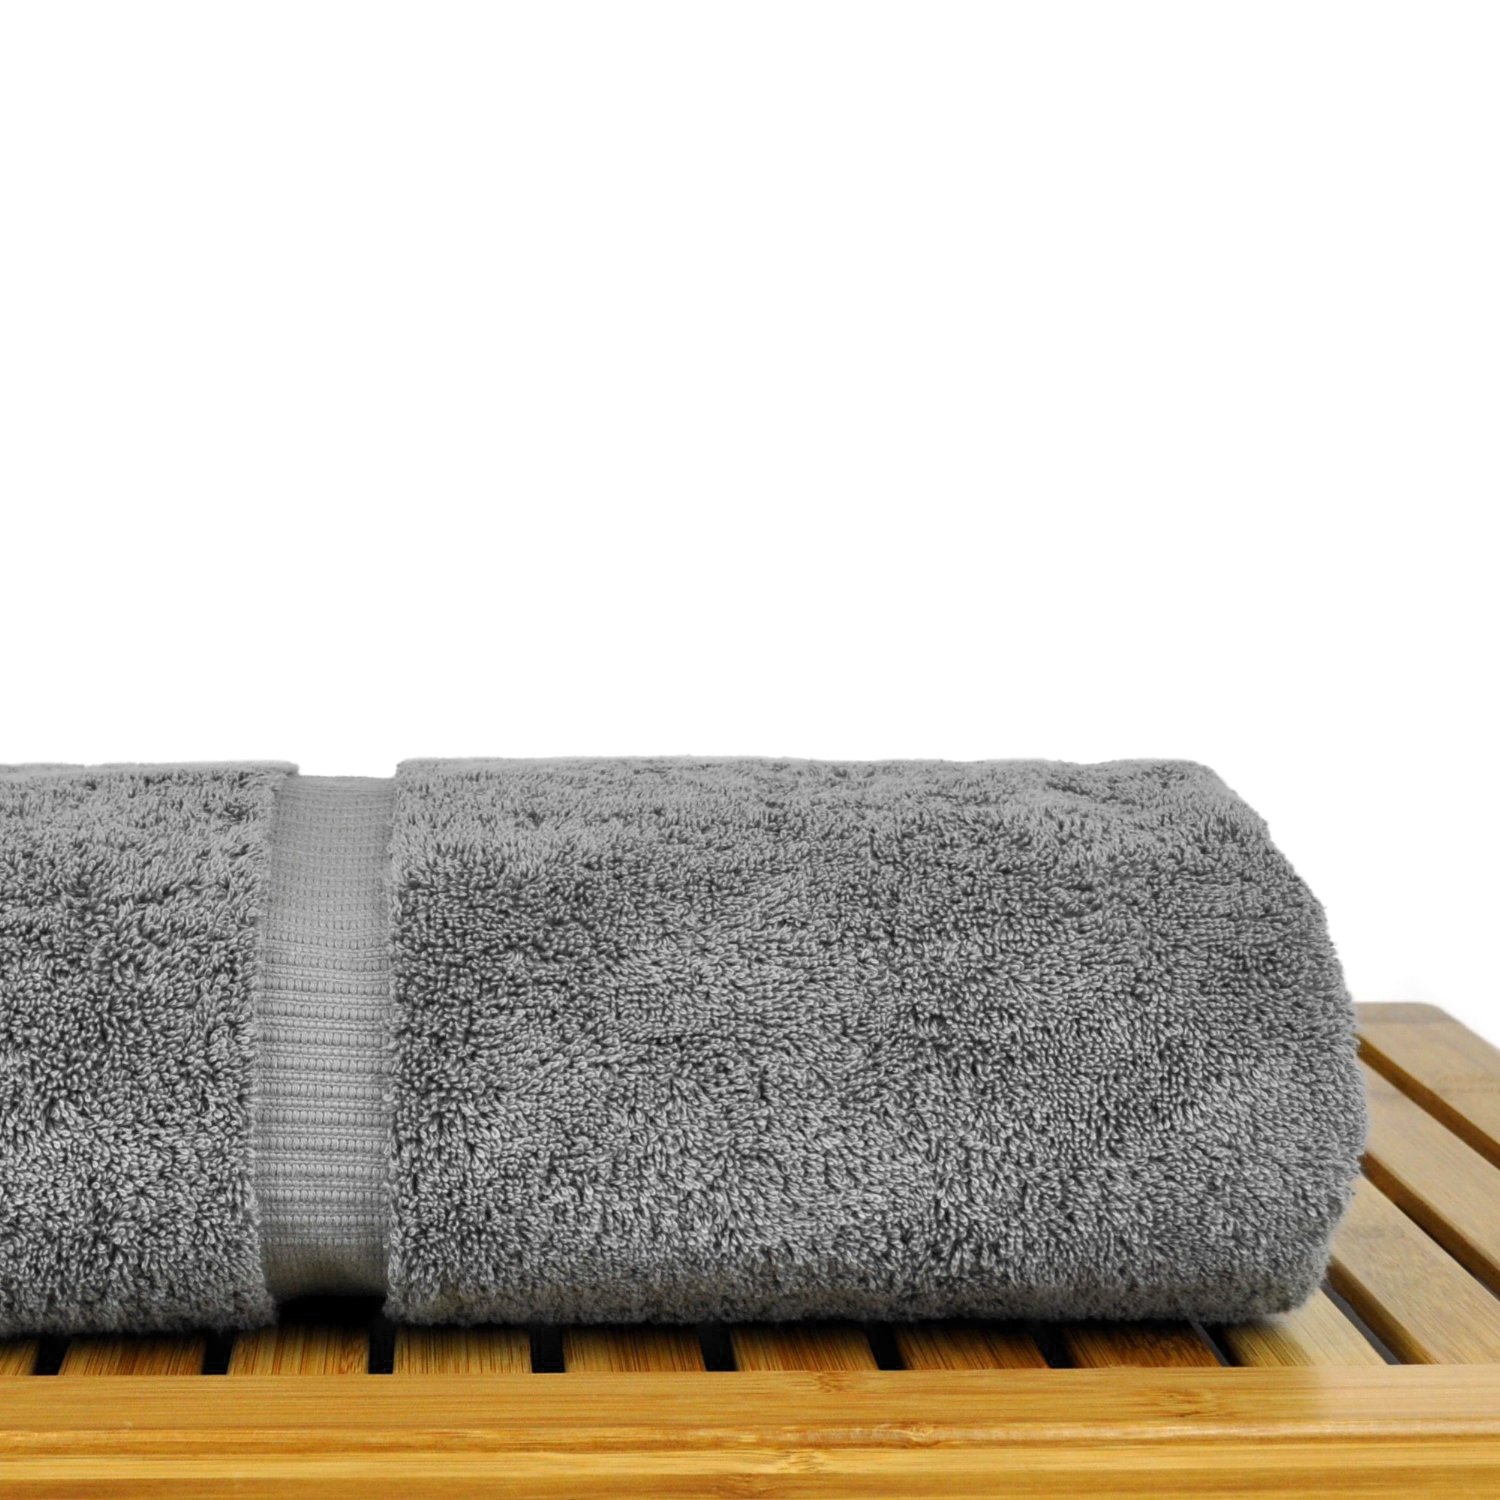 27" x 54" - 17 lbs/doz - 100% Turkish Cotton Gray Bath Towel - Dobby Border-Robemart.com